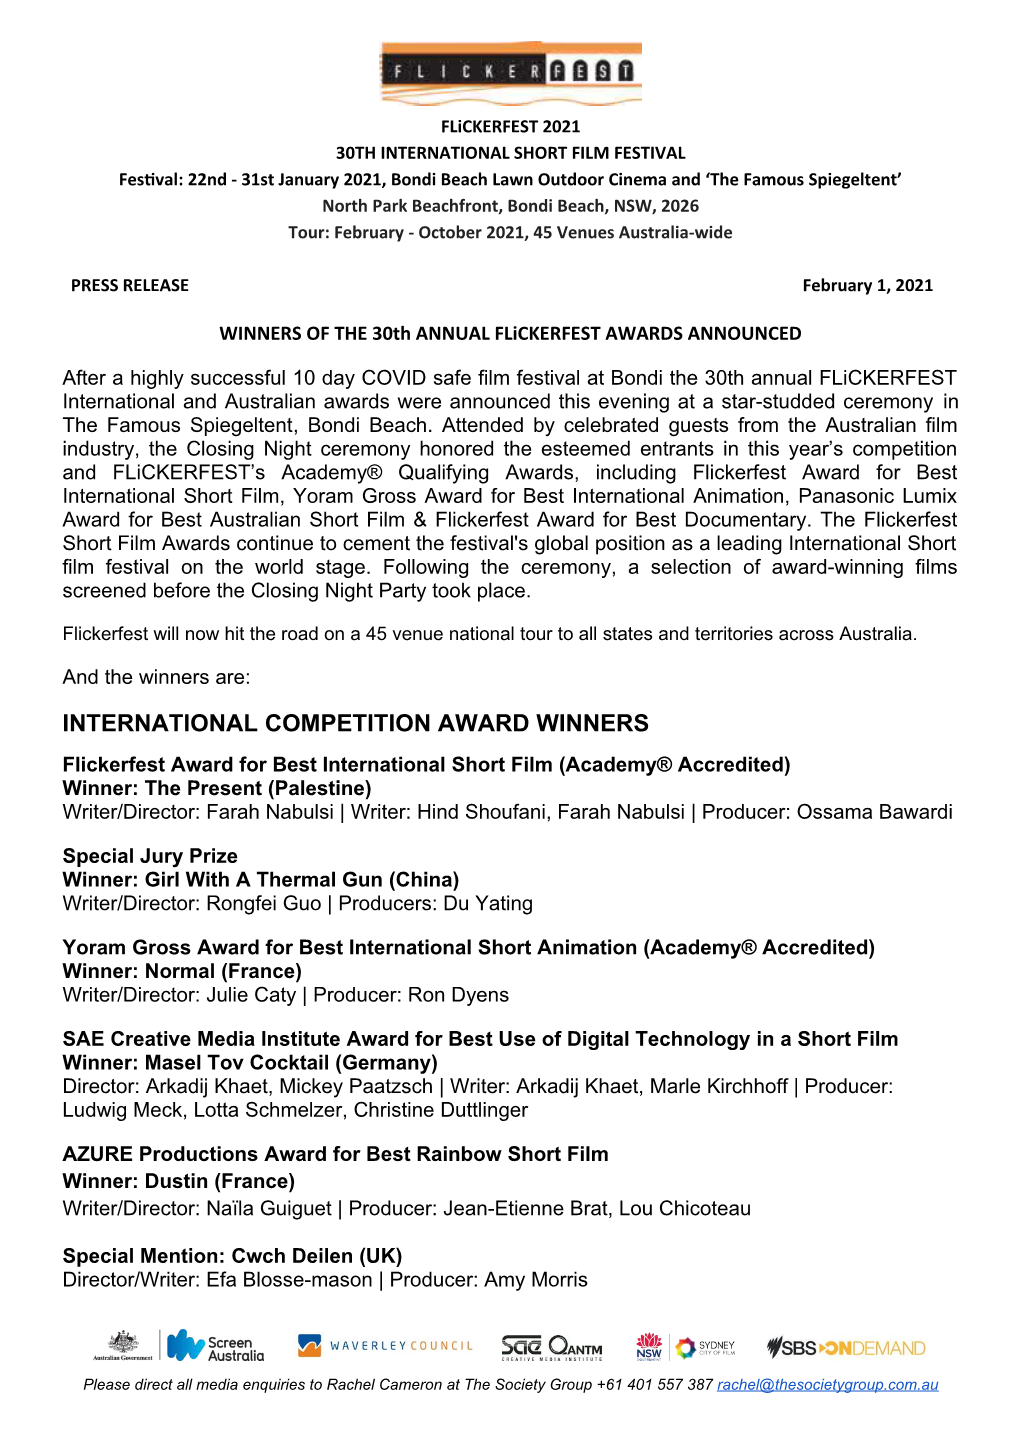 International Competition Award Winners